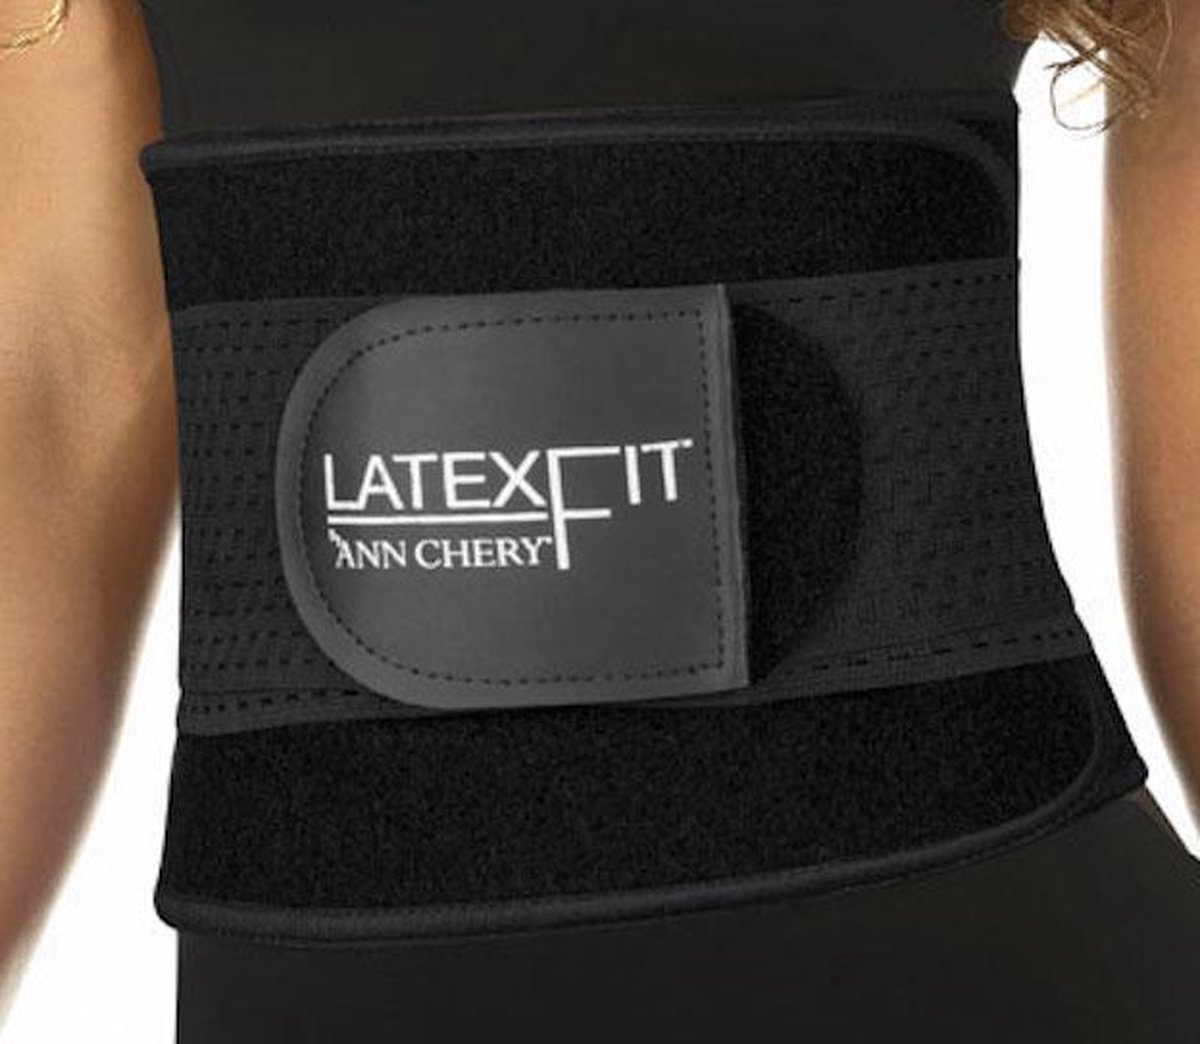 Ann Chery – Latex Fitness Gordel - Extra ondersteunend - Zwart - Maat 3XL (kledingmaat 44/46)